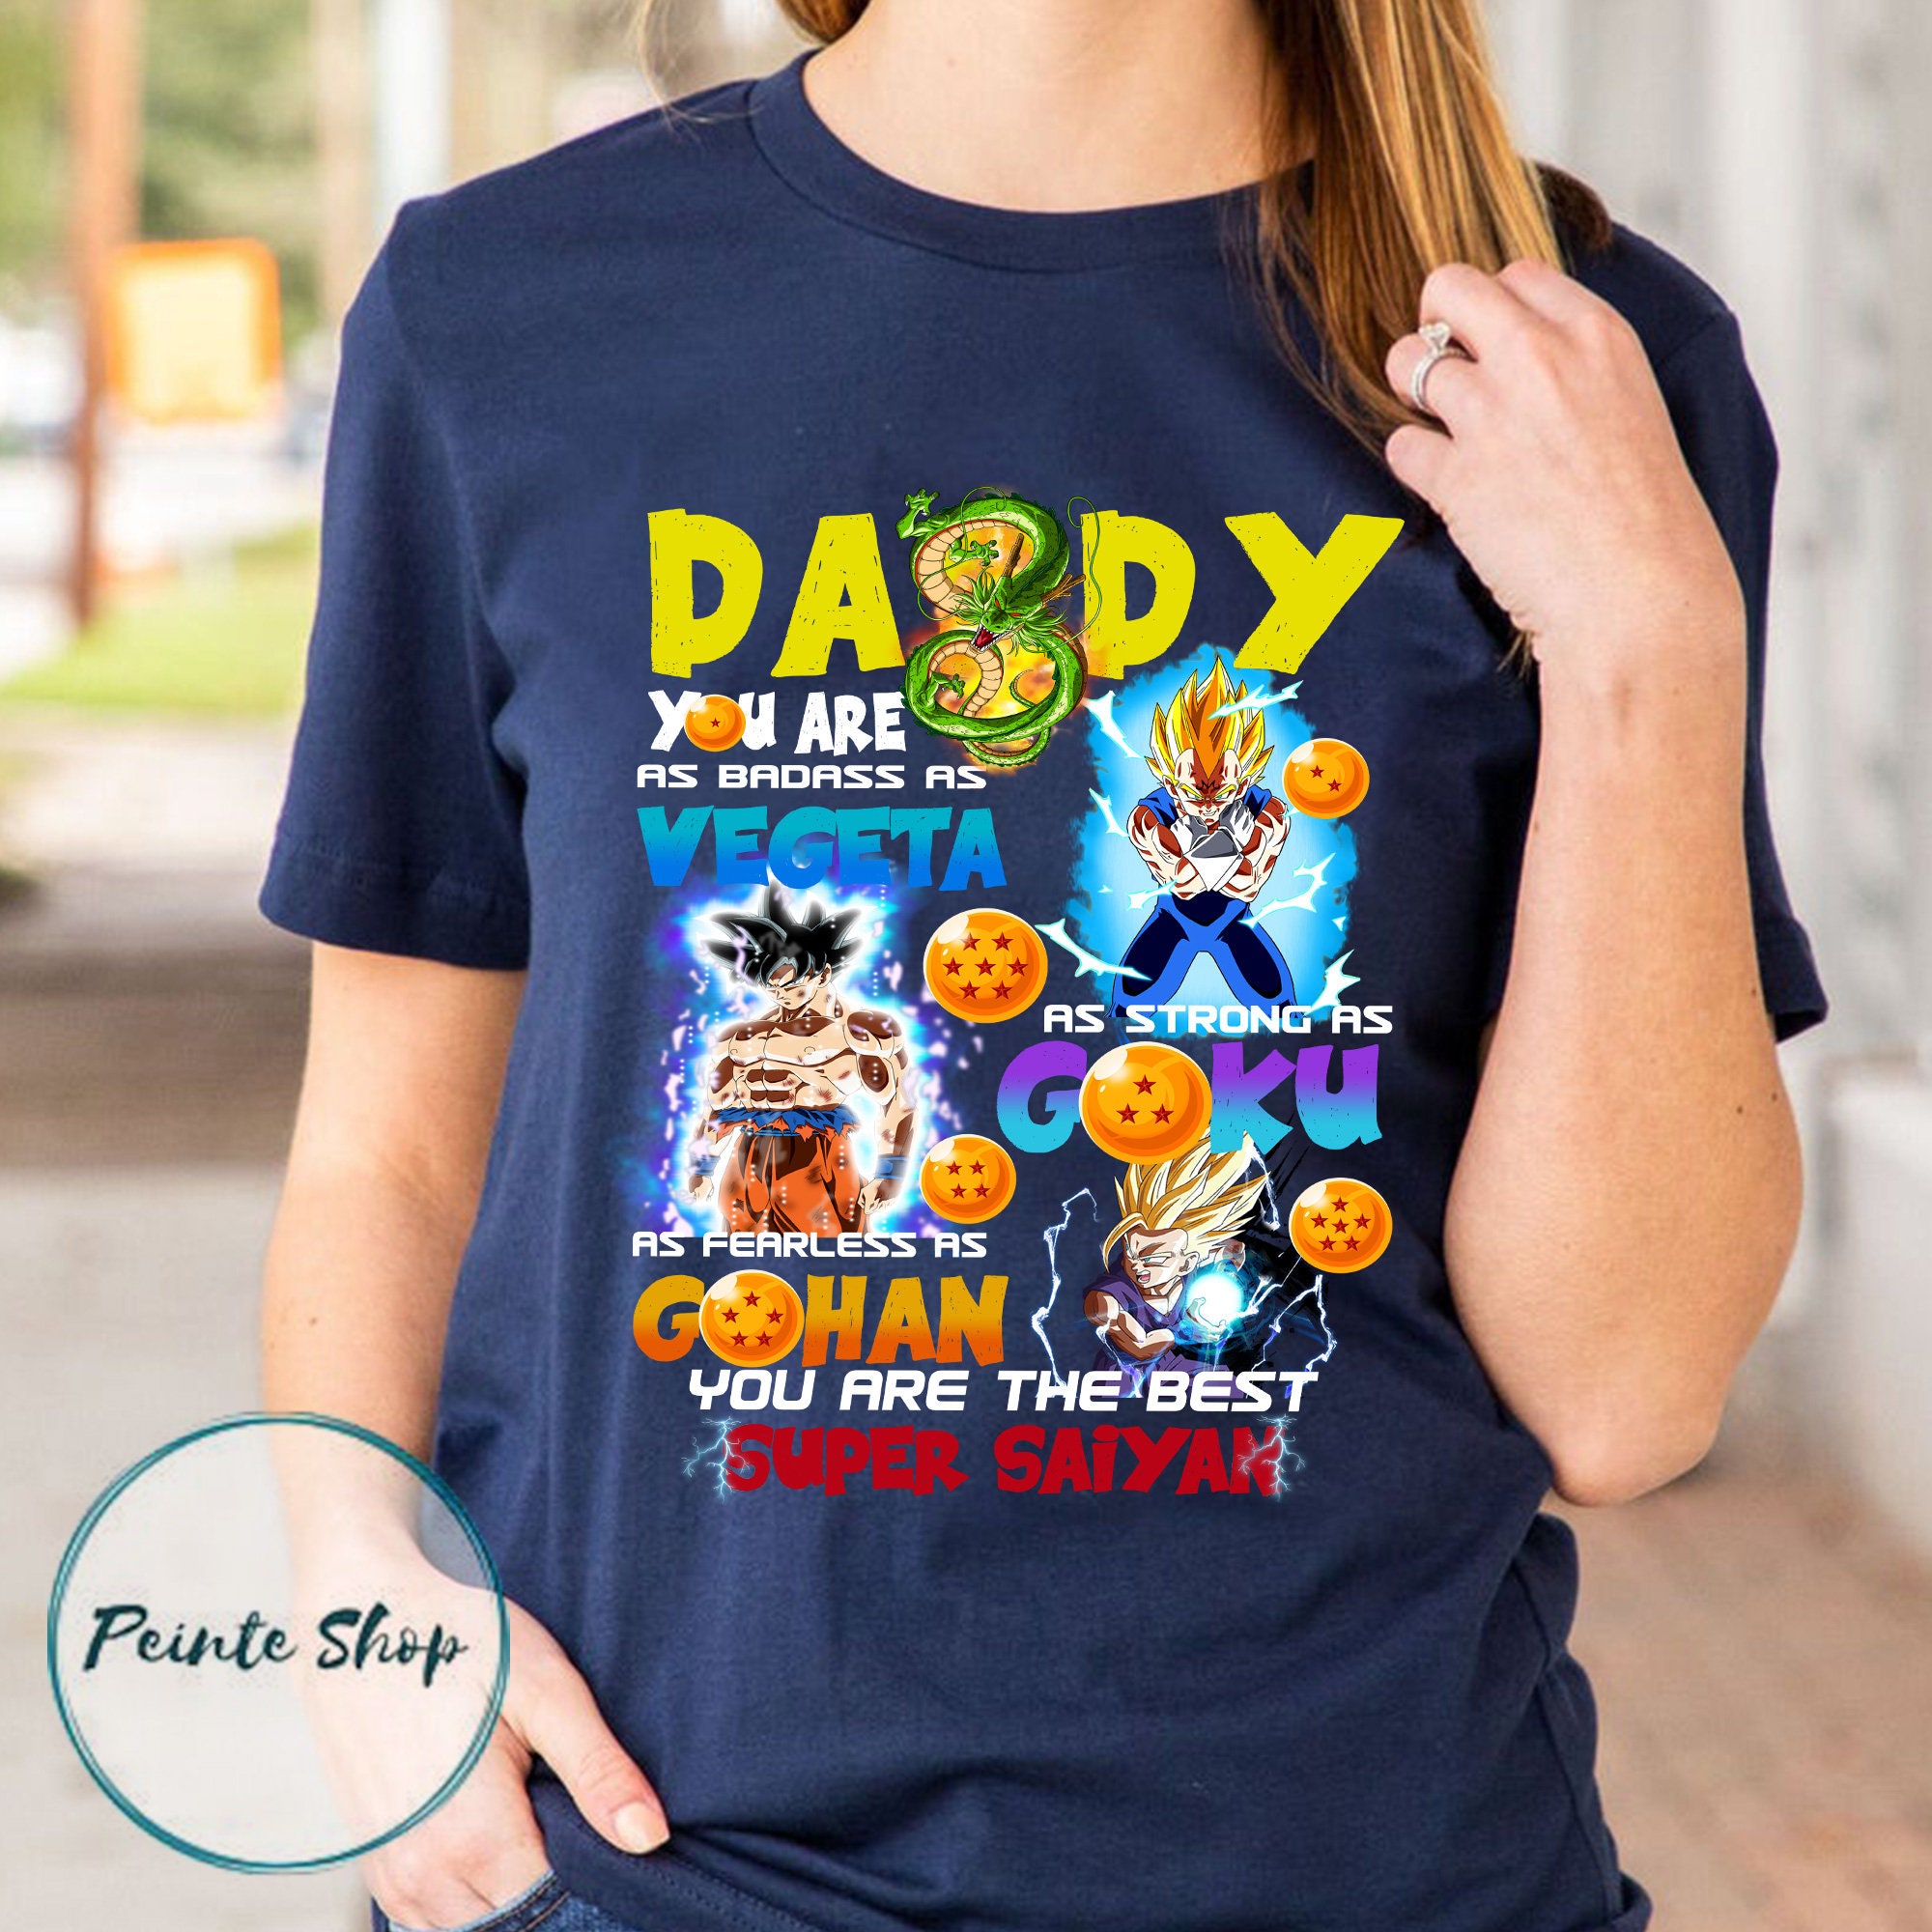 Daddy You Are The Best Super Saiyan Unisex T-shirt, Vegeta Gohan Goku, Best Dad Shirt